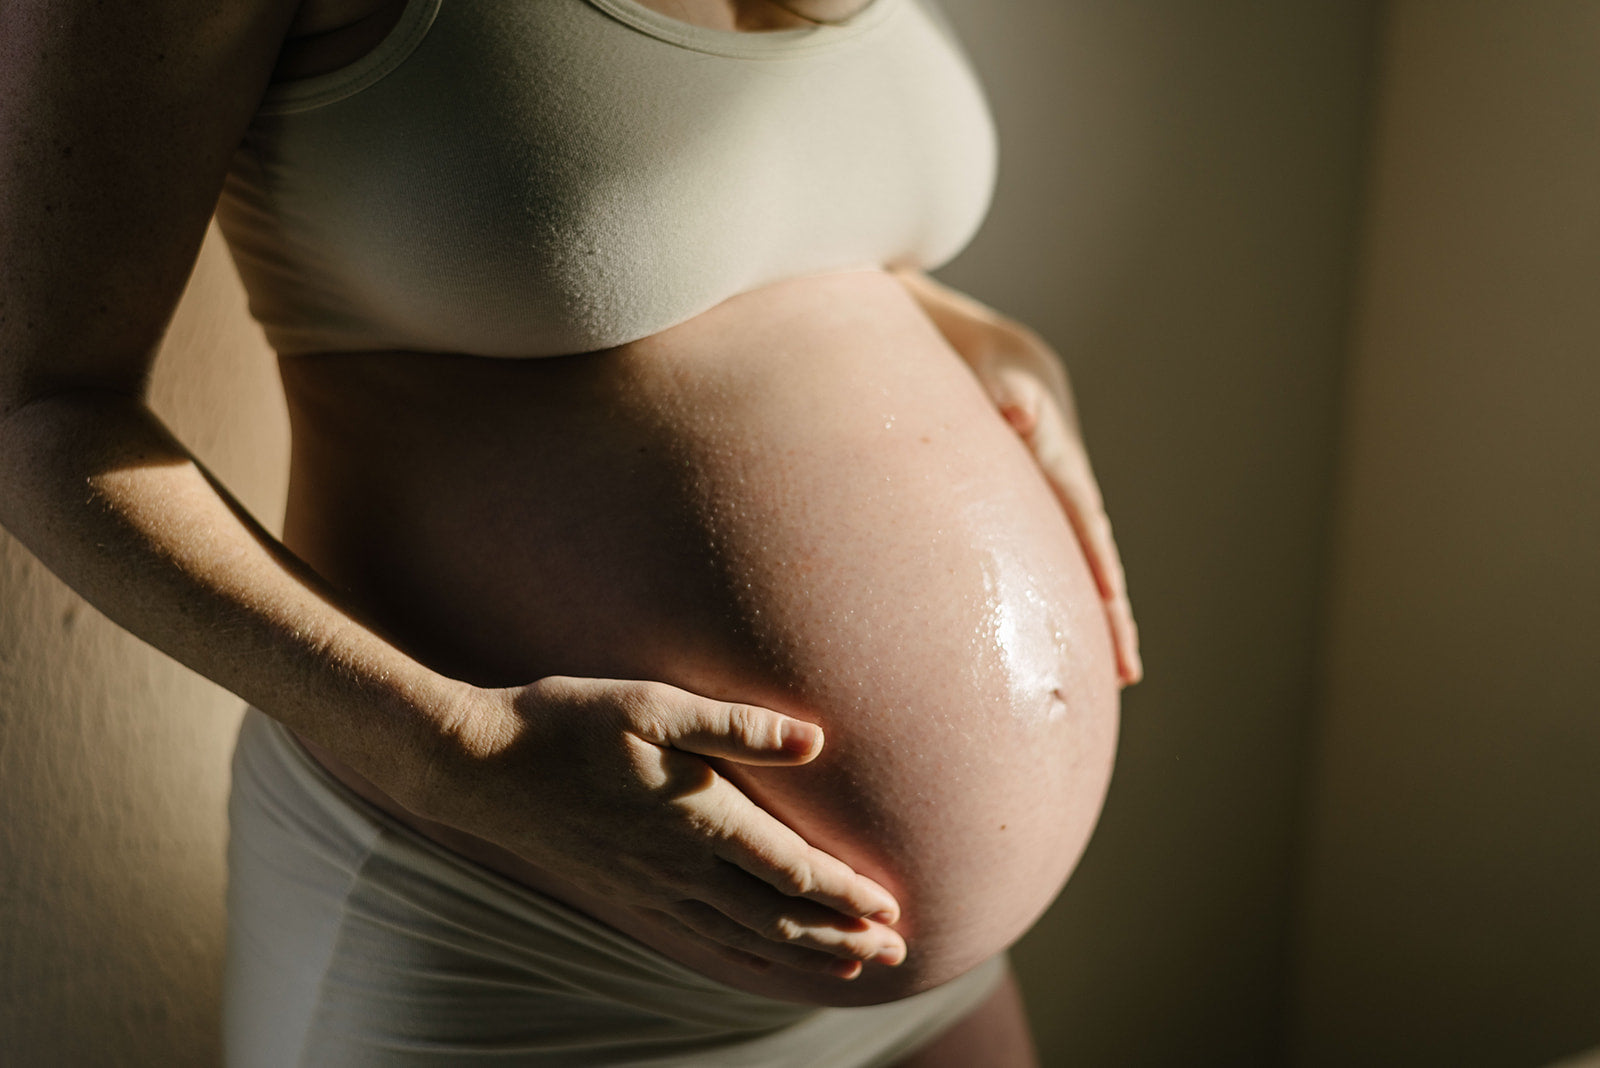 PREGNANCY SAFE